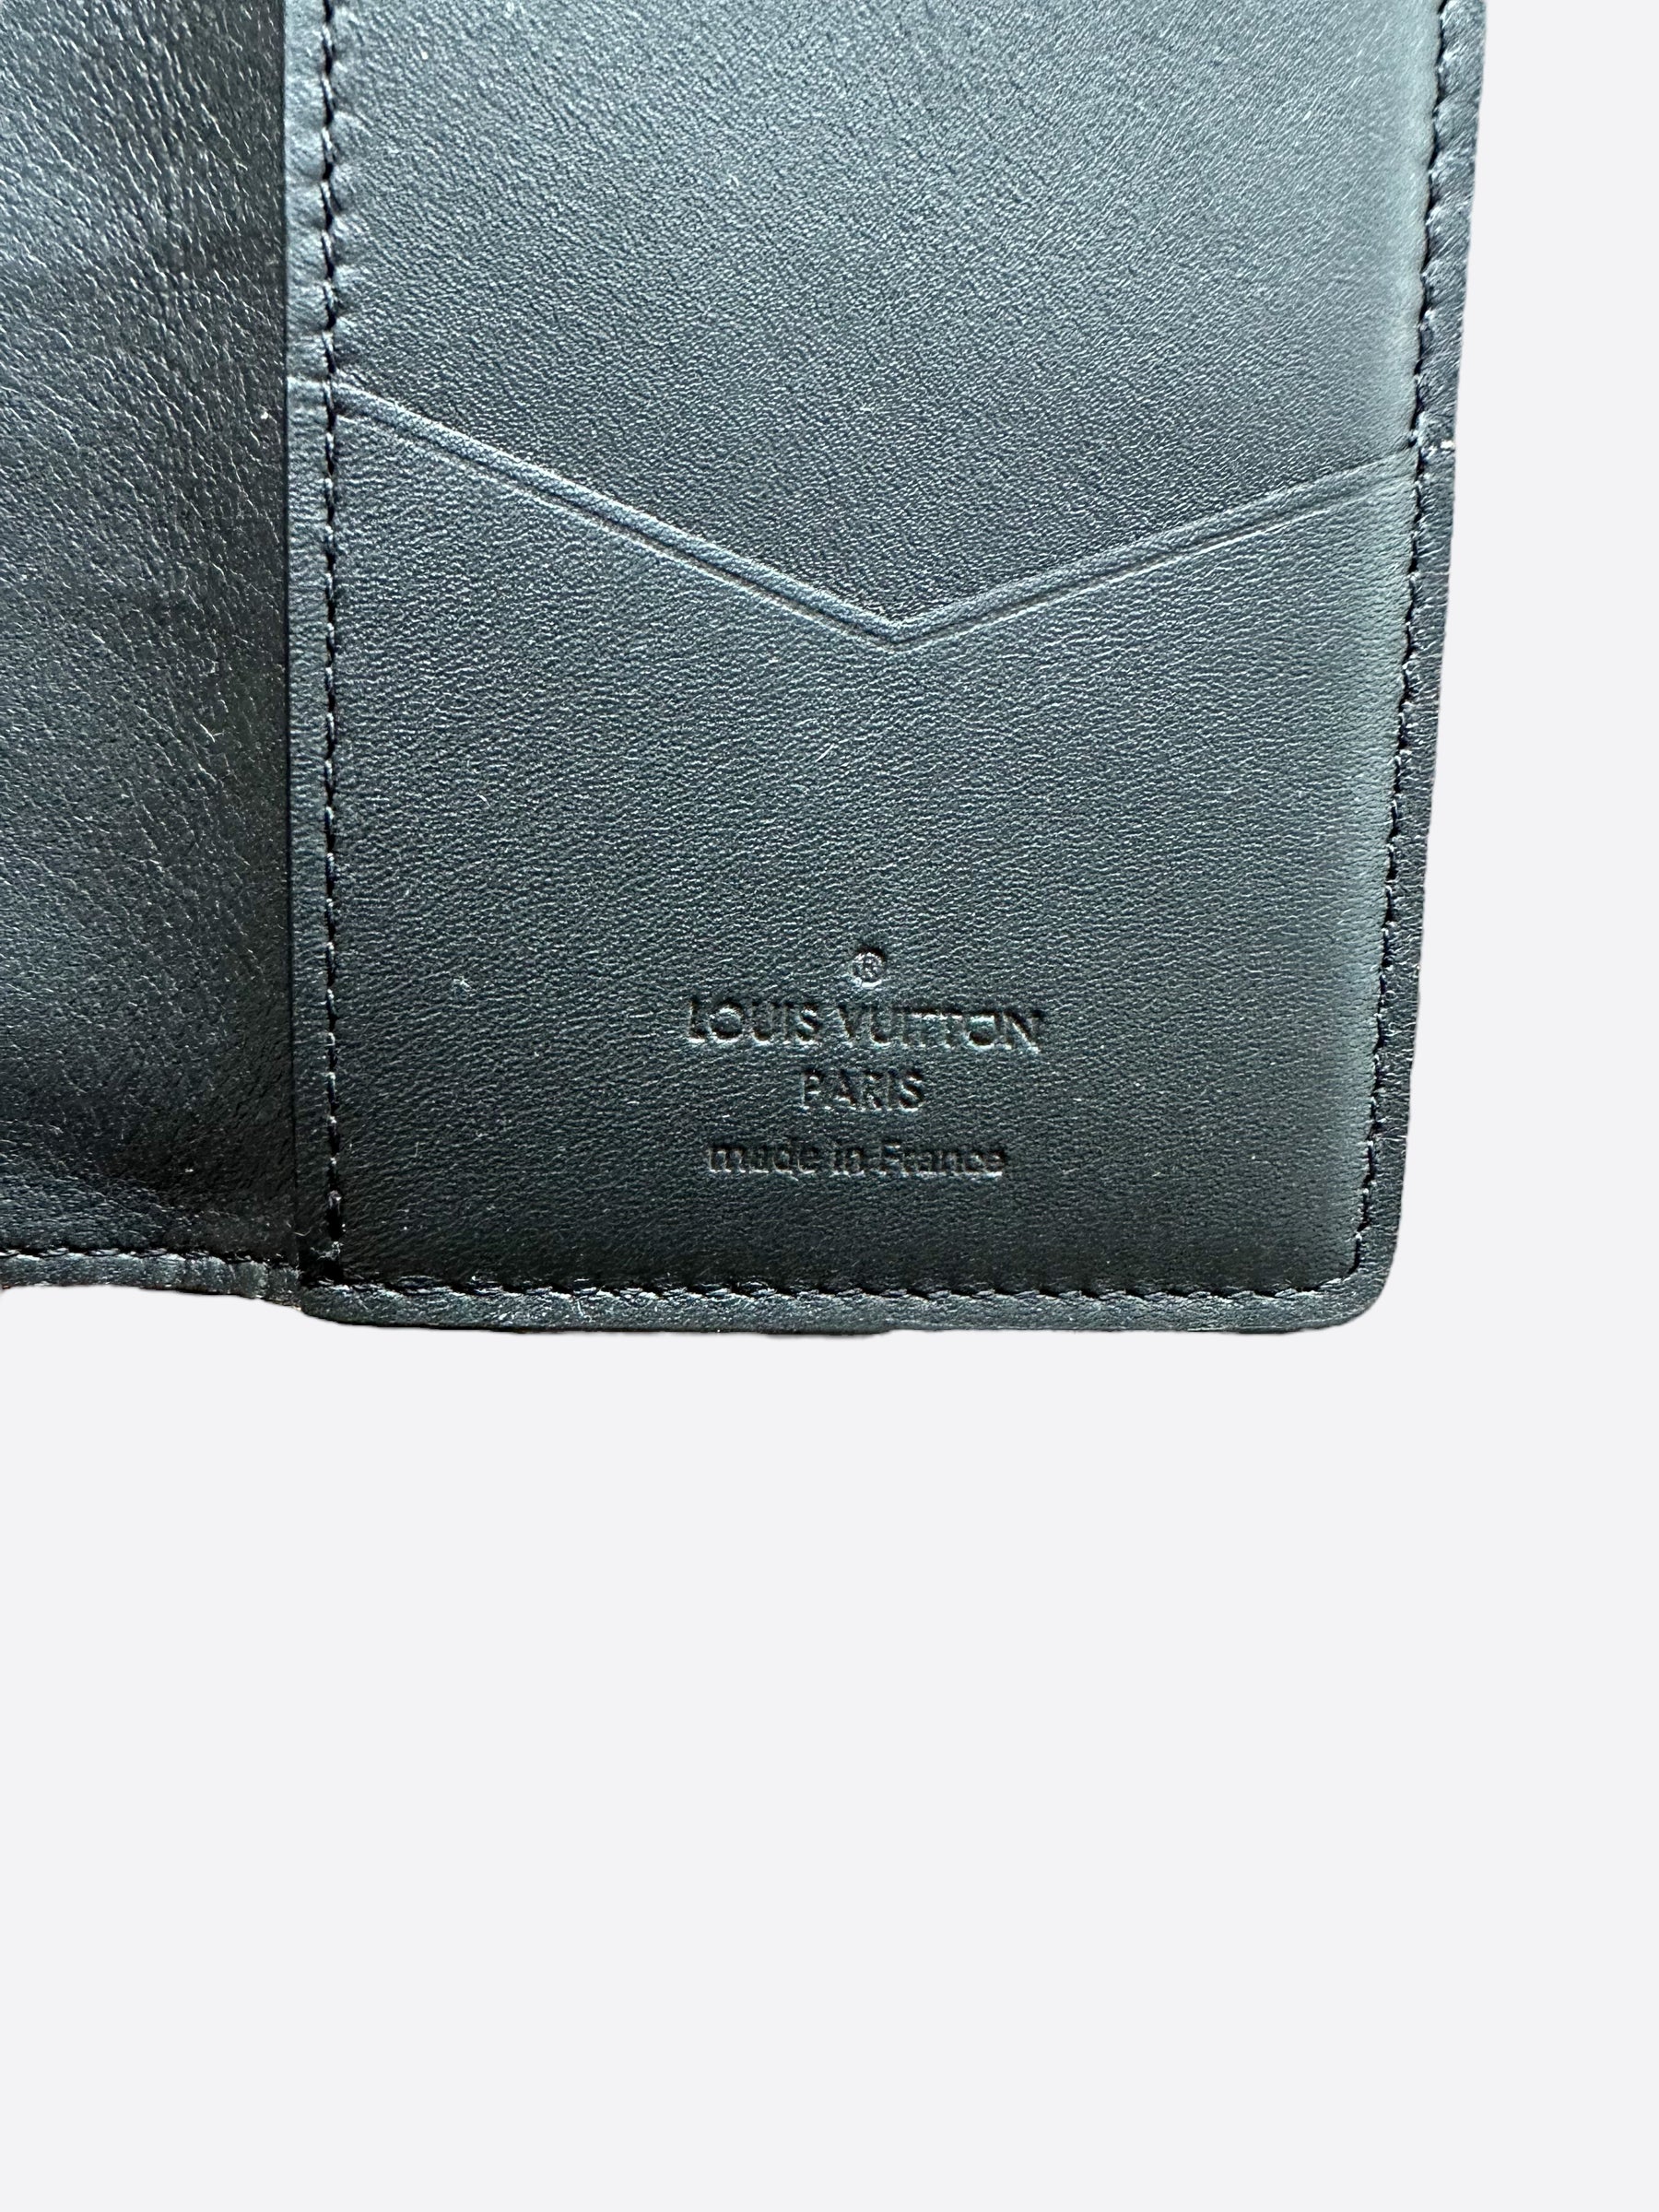 Louis Vuitton Damier Ebene Pocket Organizer Wallet